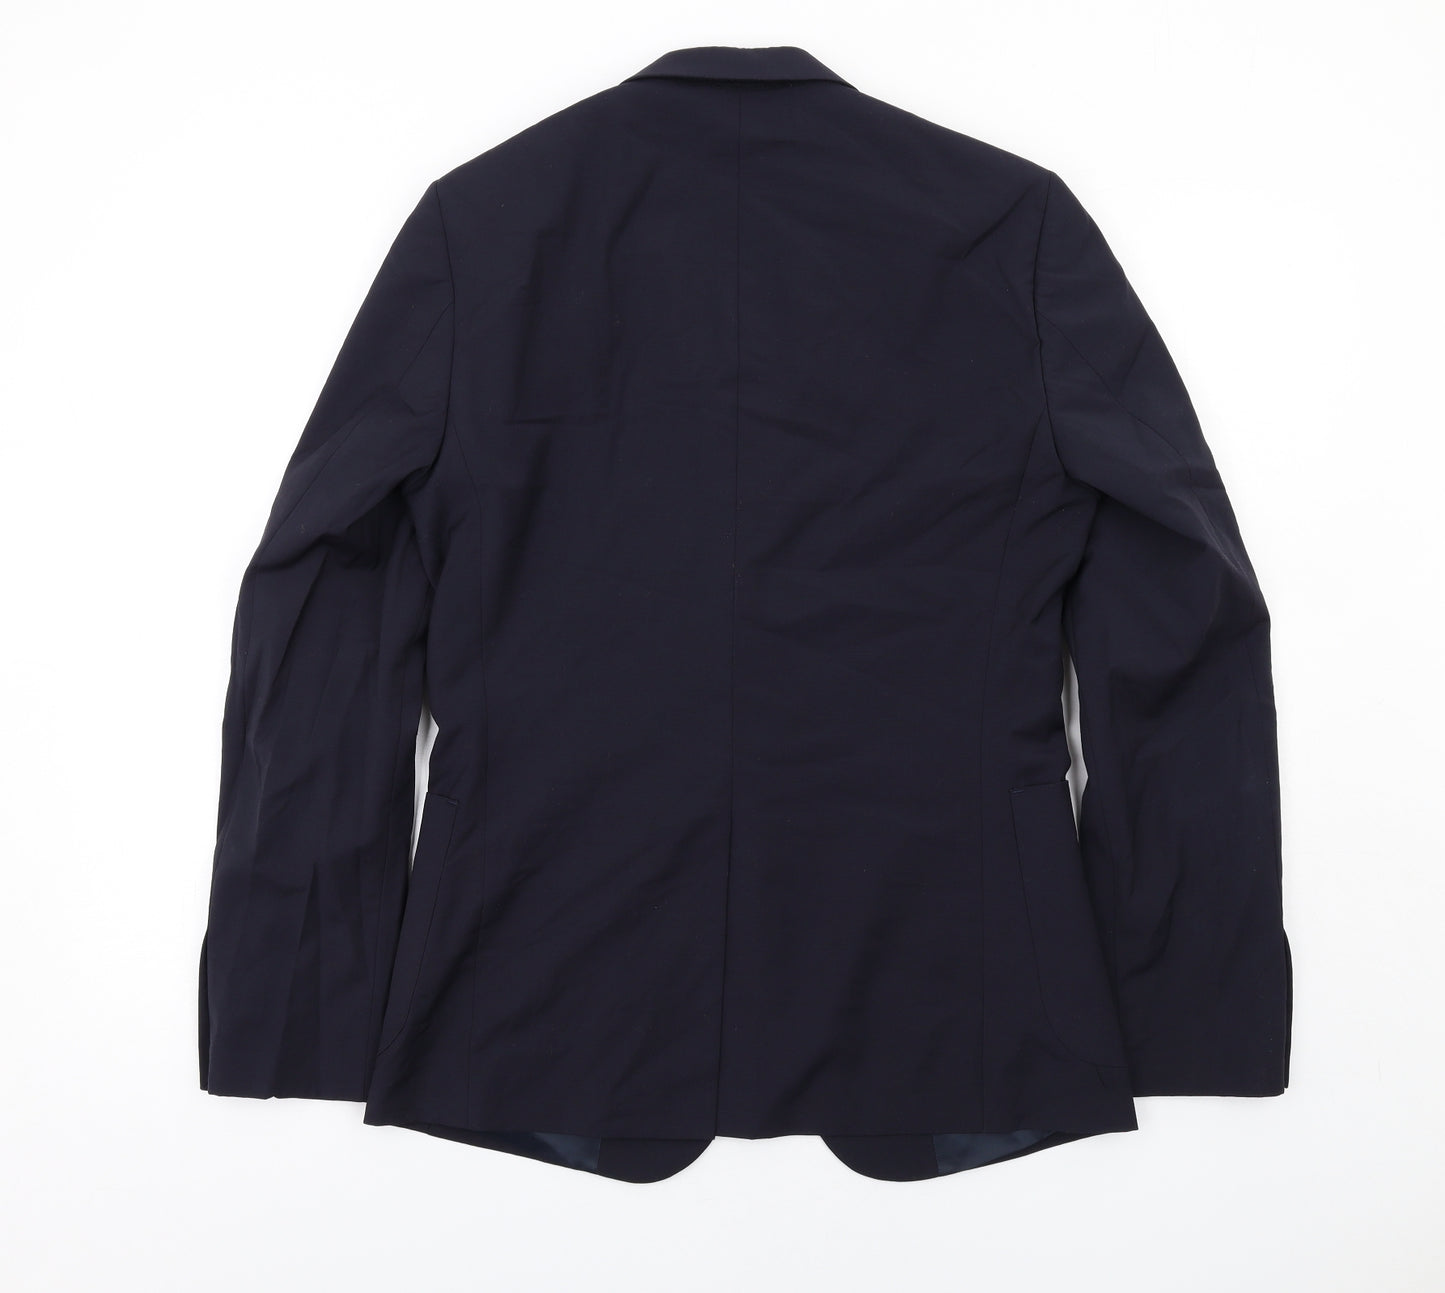 DKNY Mens Blue Wool Jacket Suit Jacket Size 38 Regular